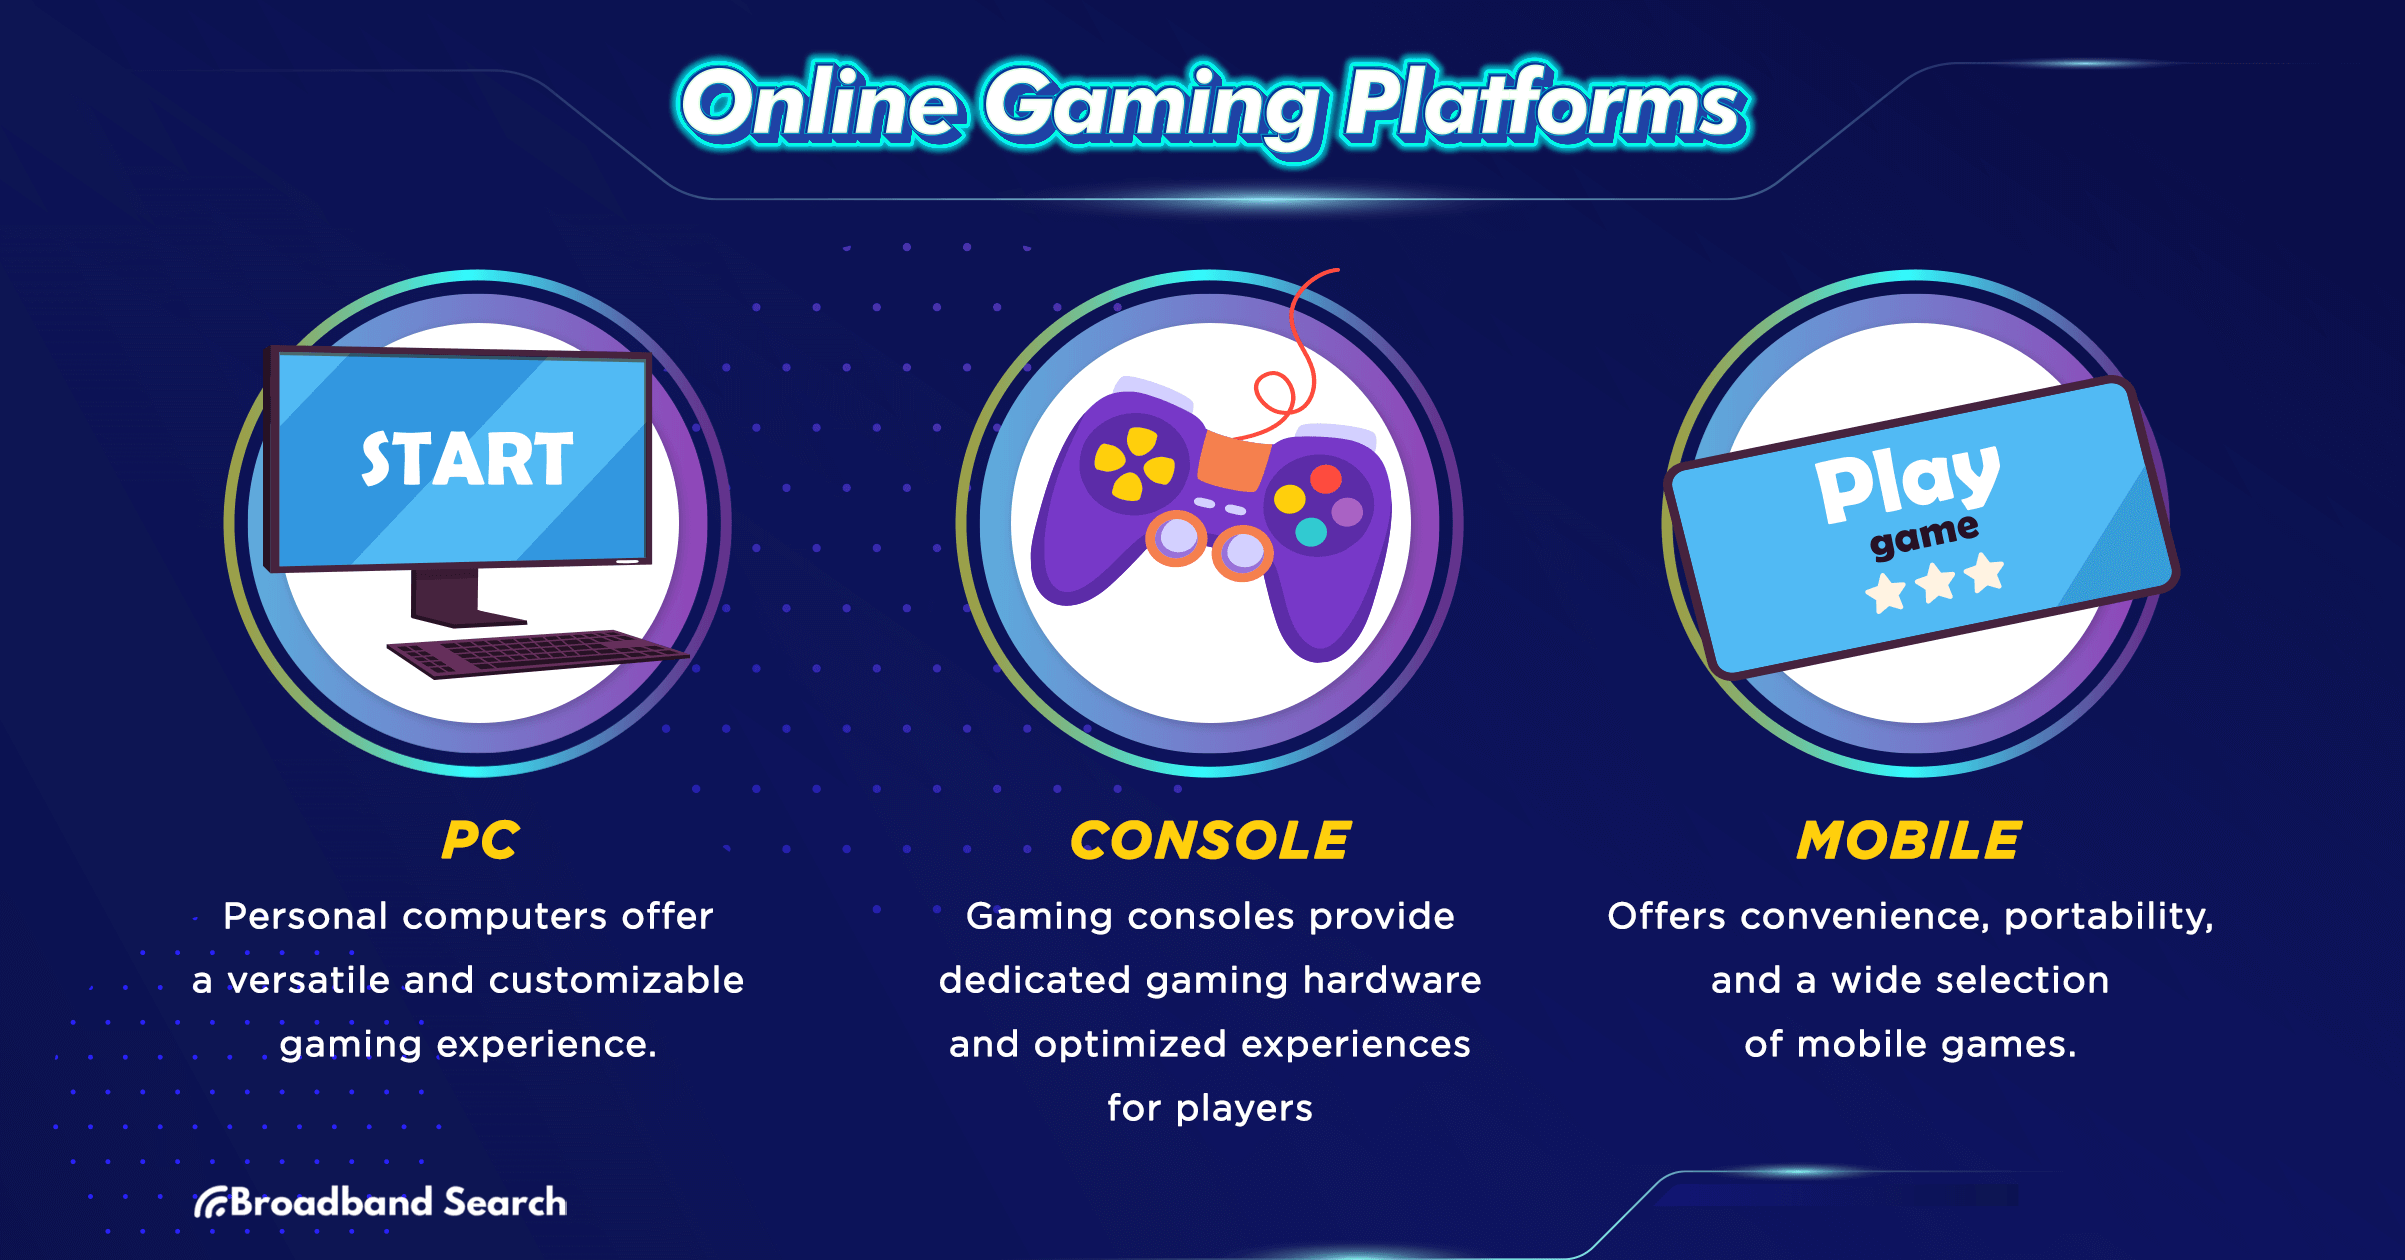 Four different online gaming platforms